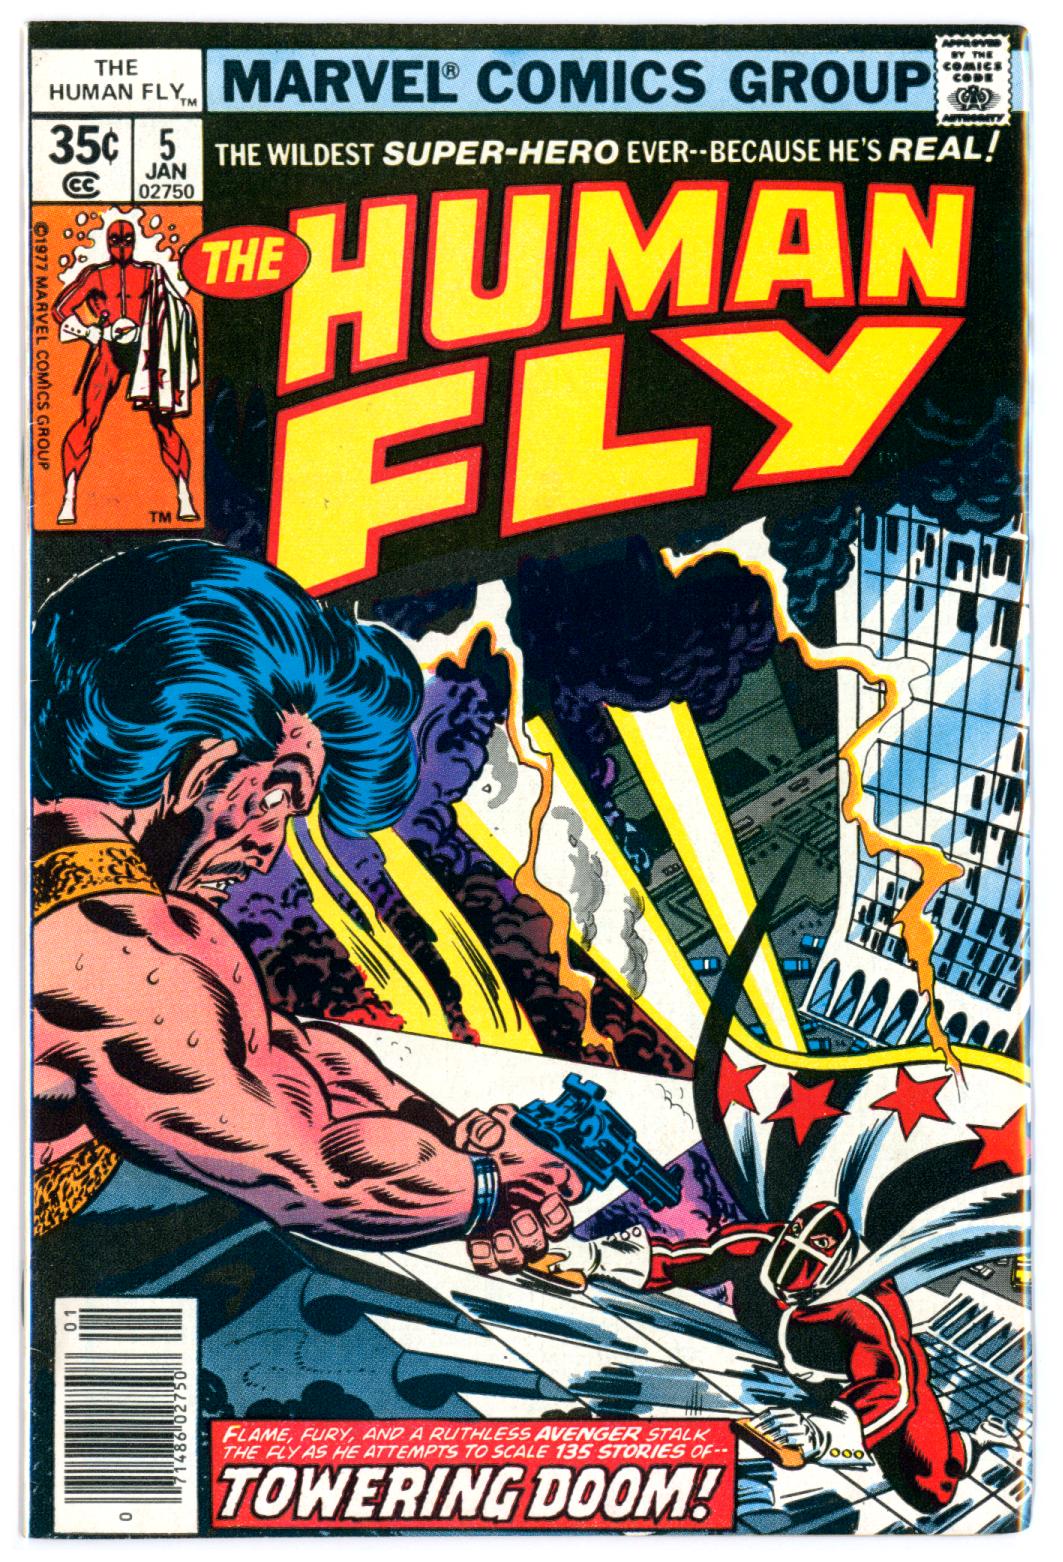 Human Fly #5